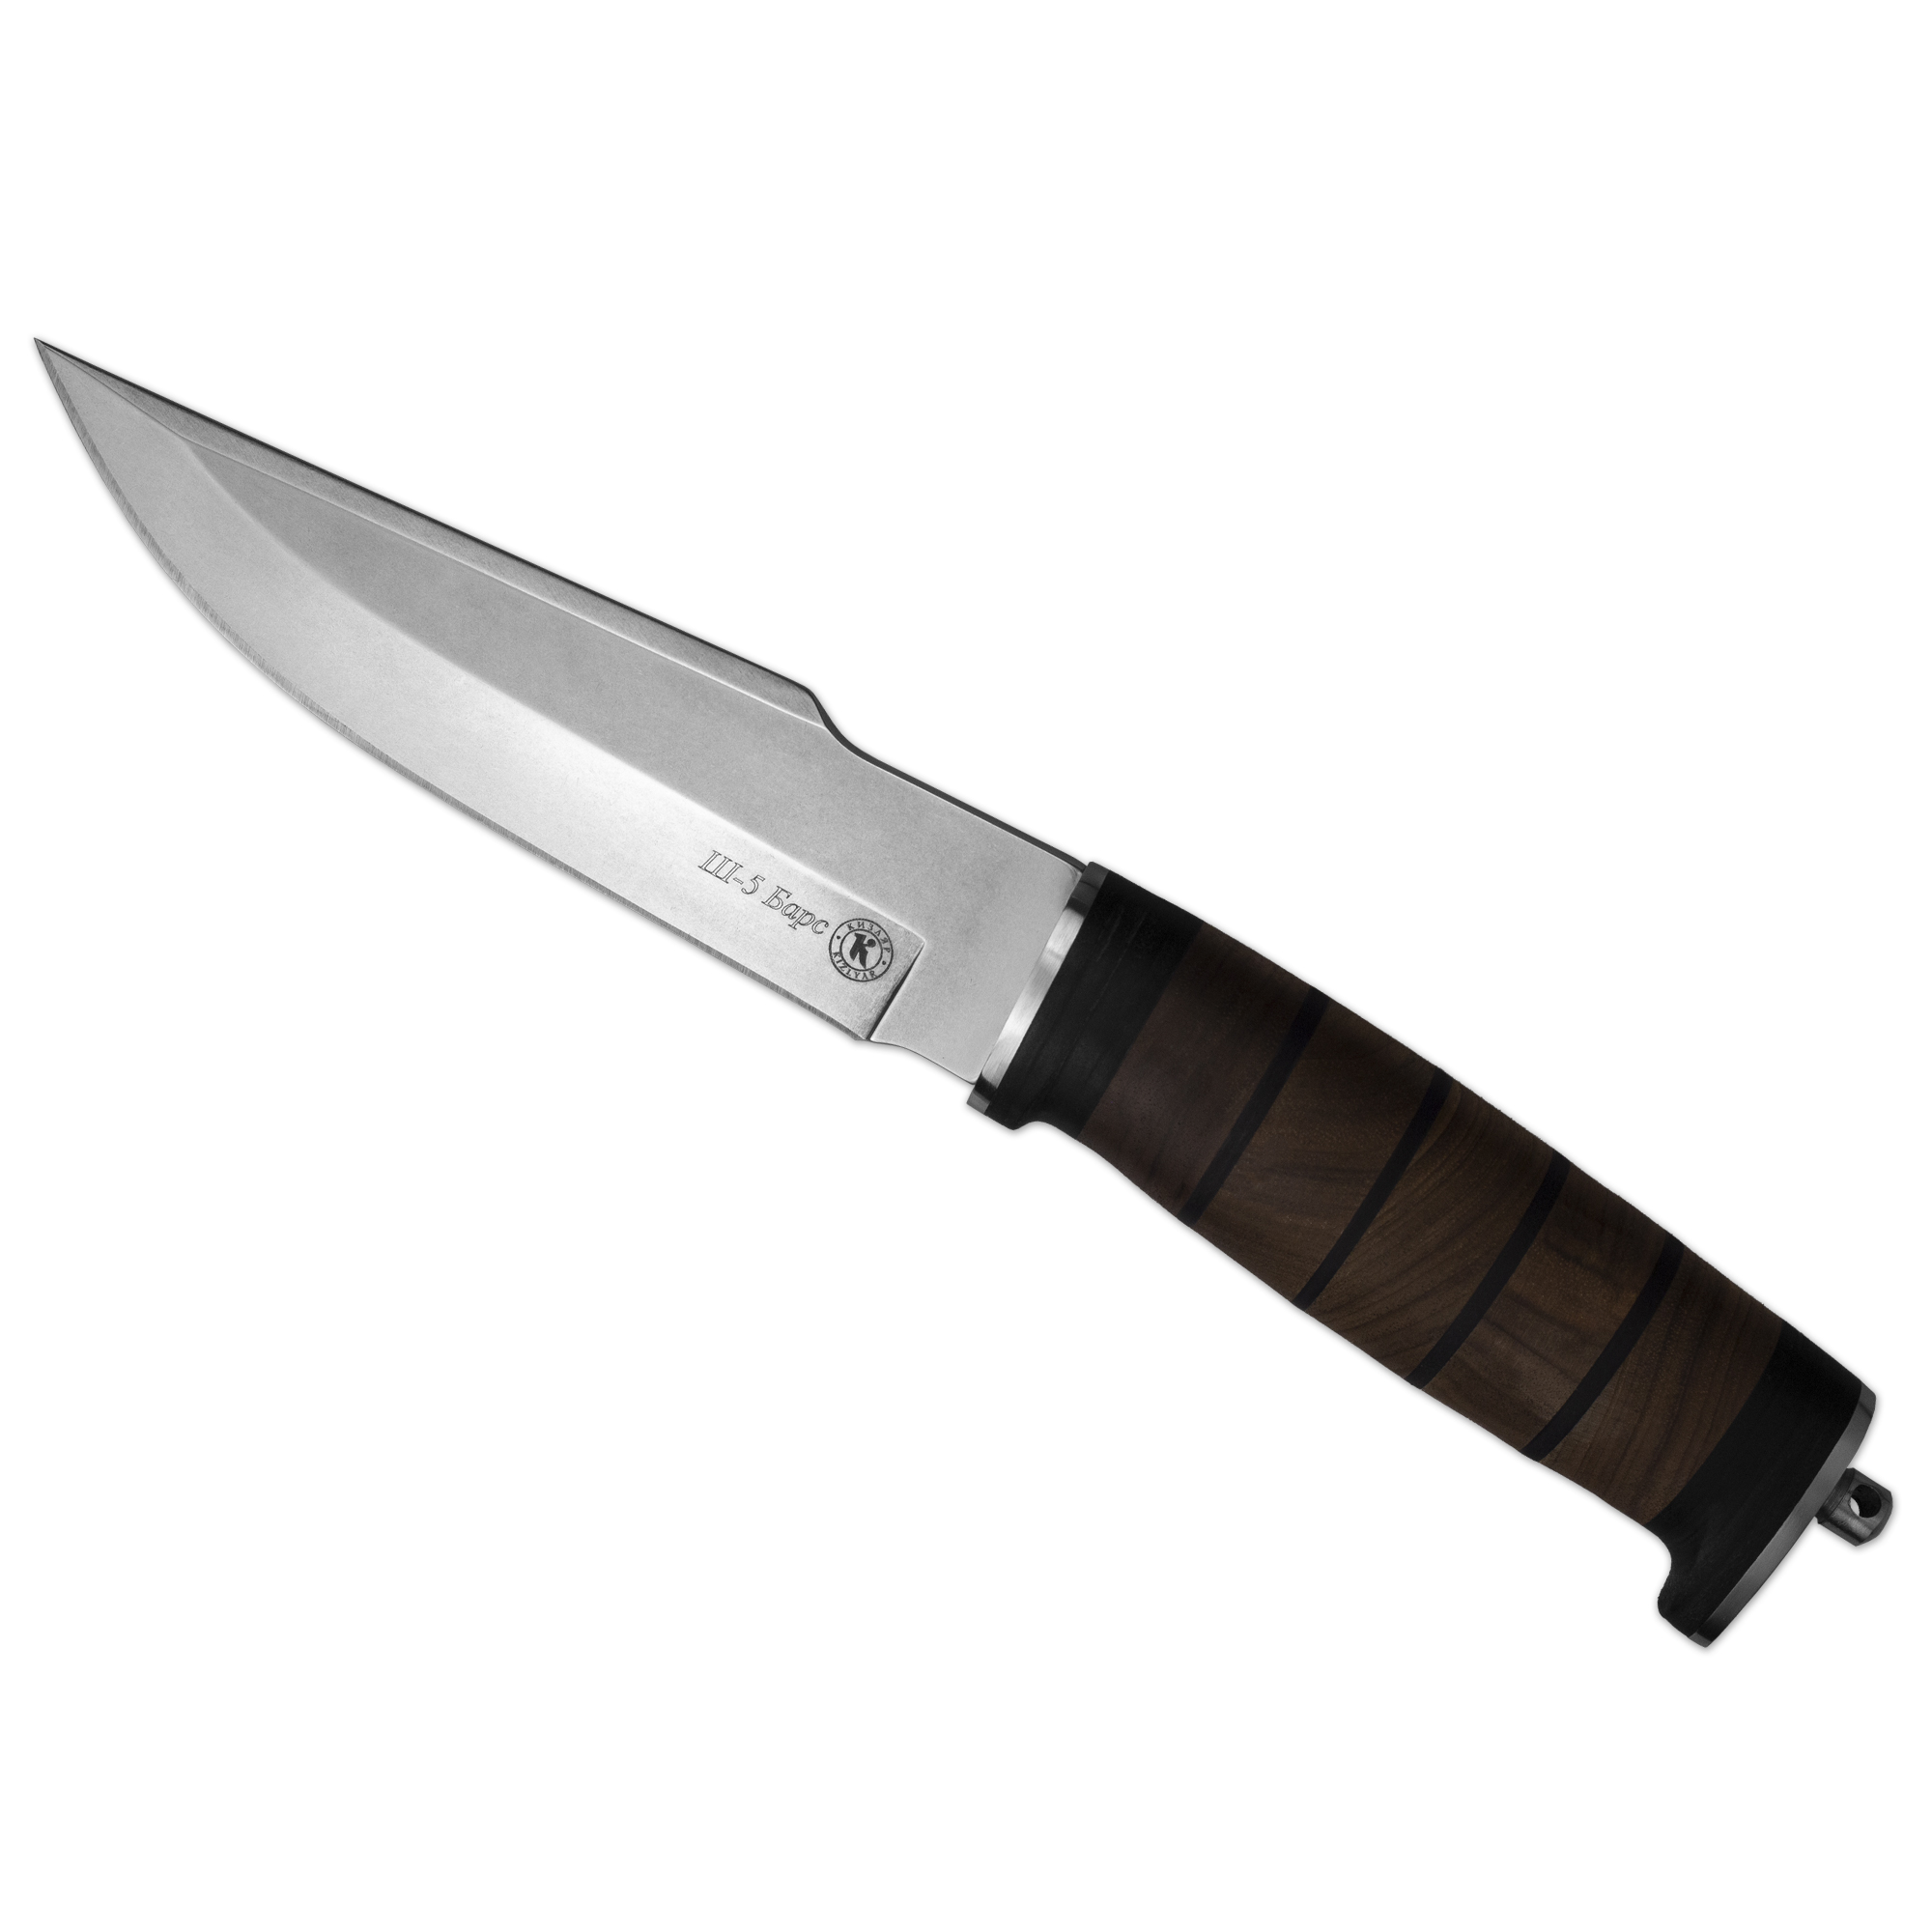 Нож туристический ПП Кизляр Ш-5 Барс, длина клинка 14.5 см